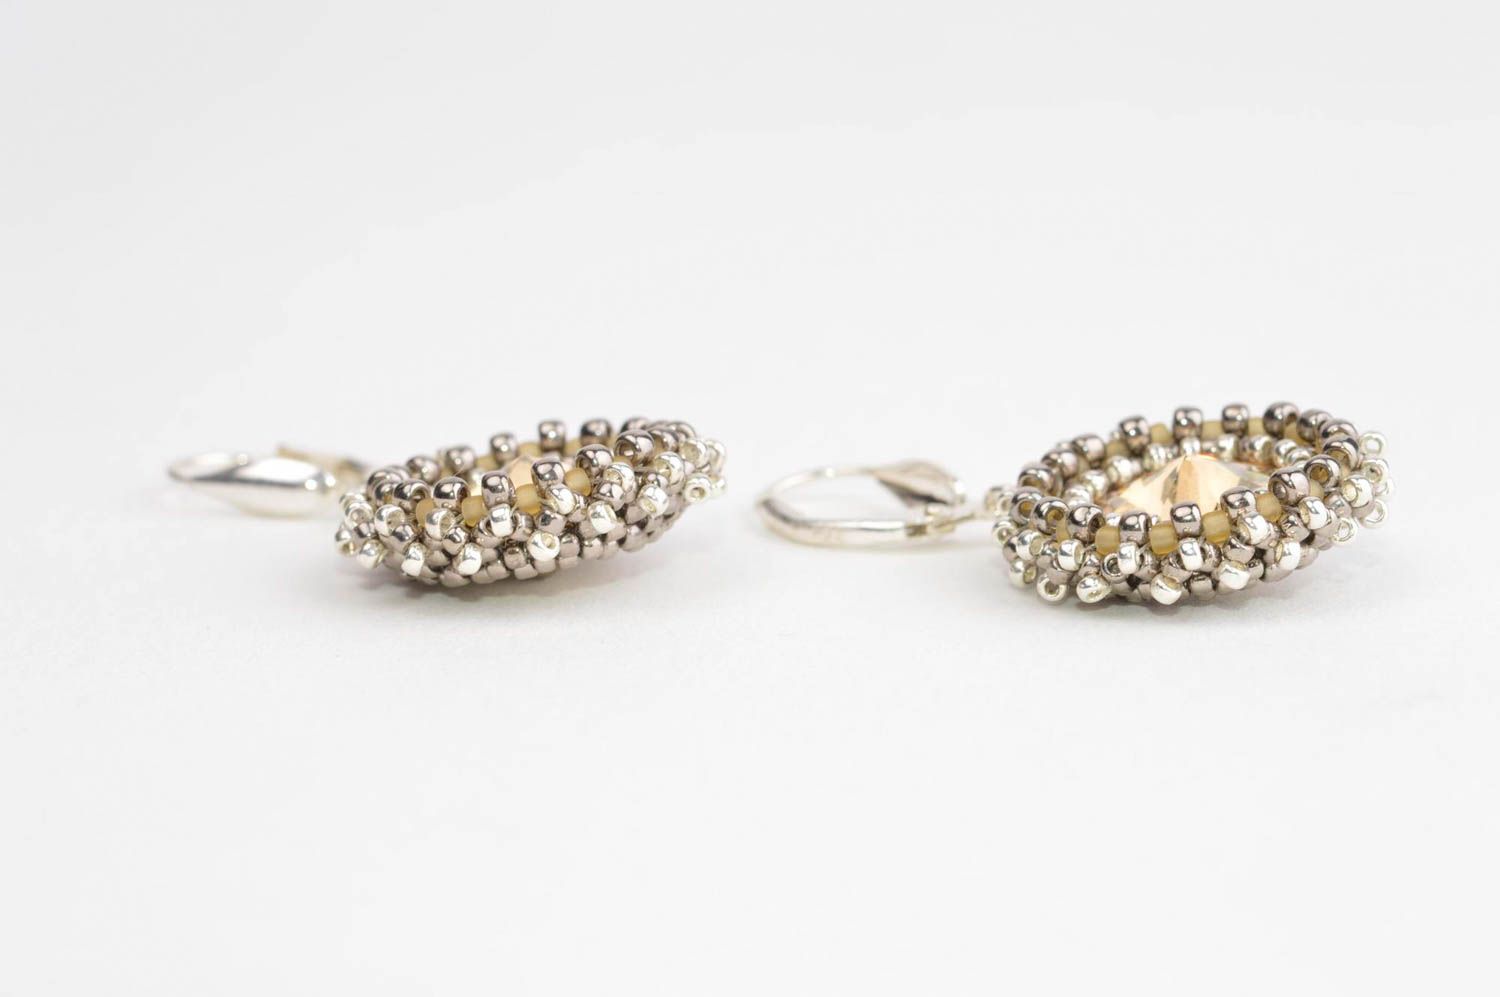 Handmade earrings with rhinestones shiny earrings evening earrings for women photo 4